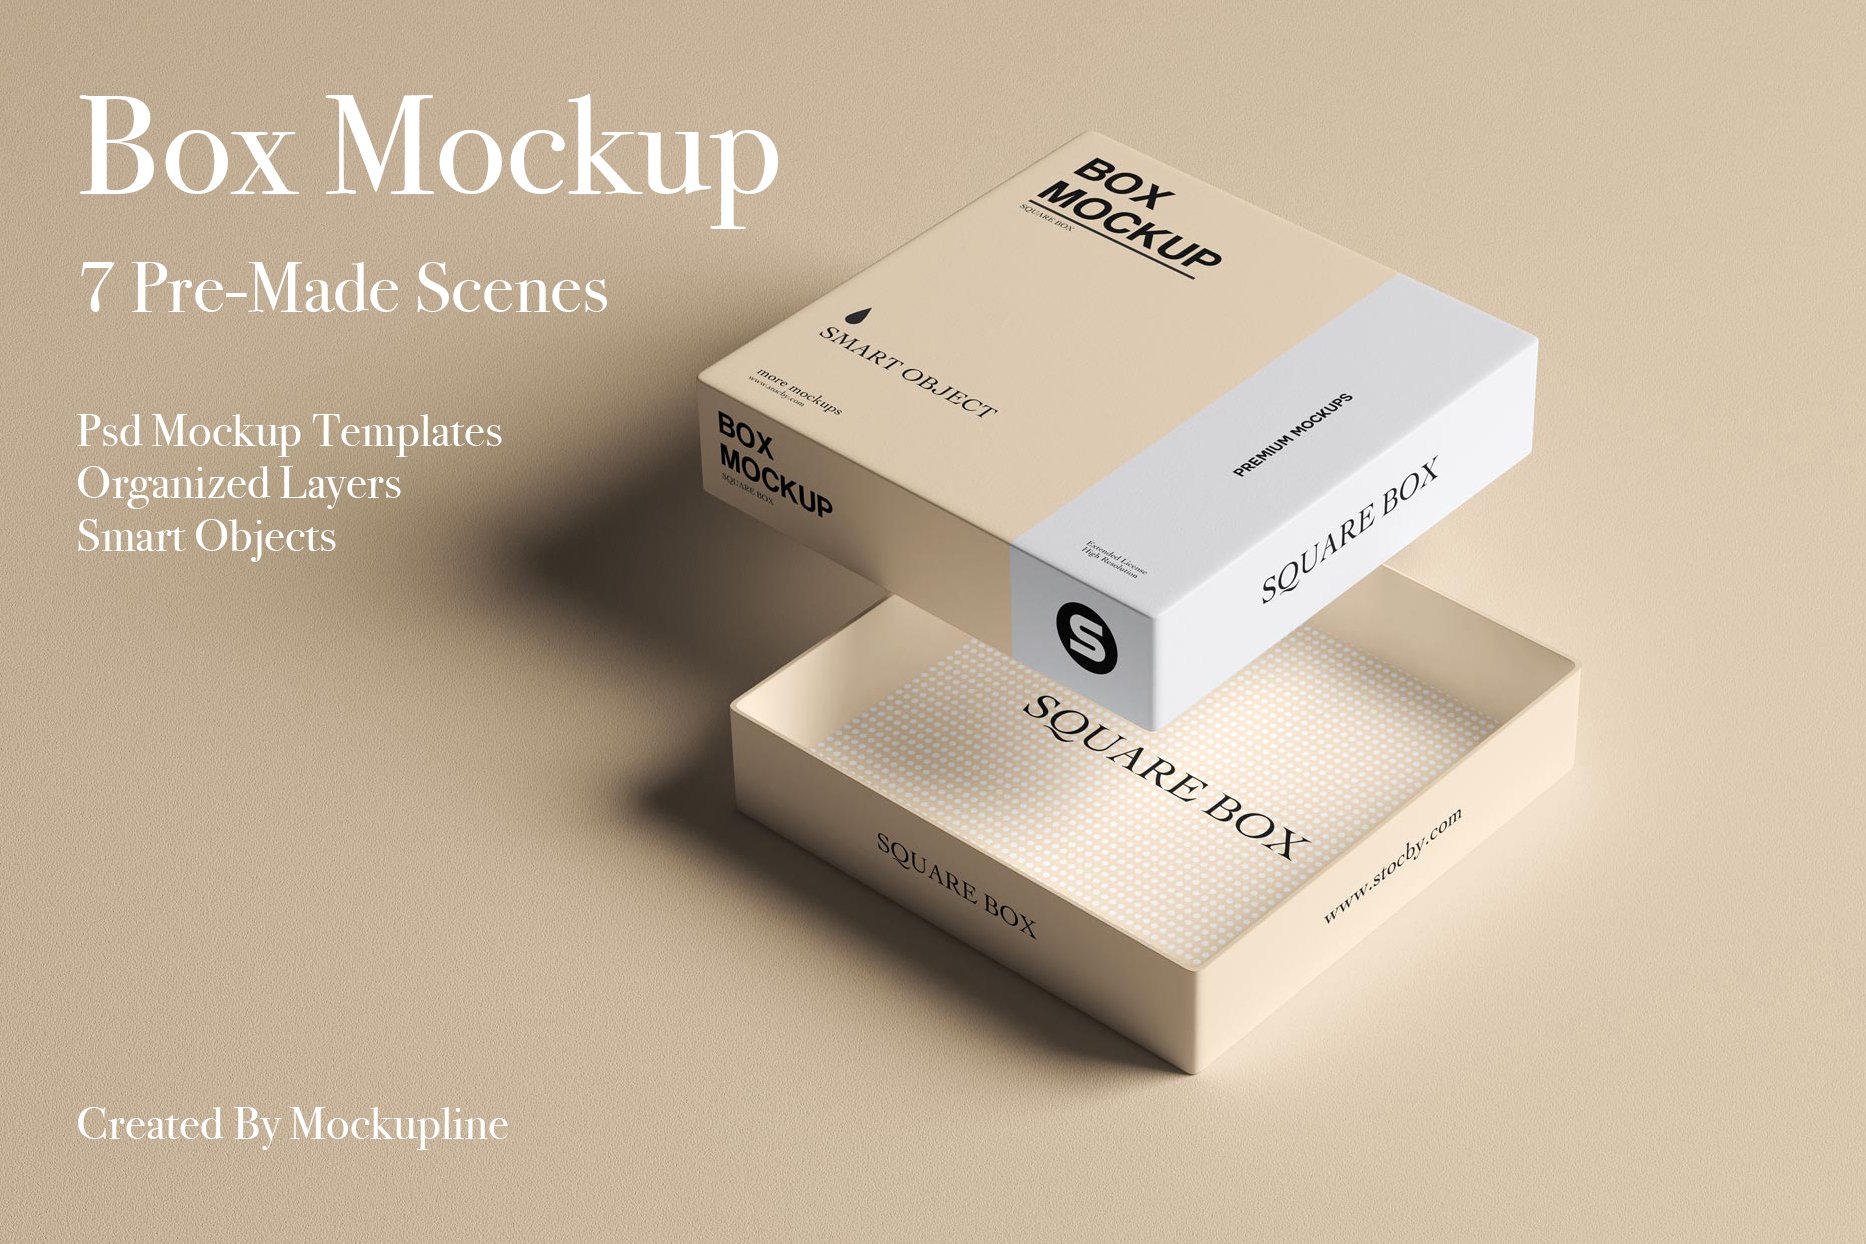 Square Box Mockup Set cover image.